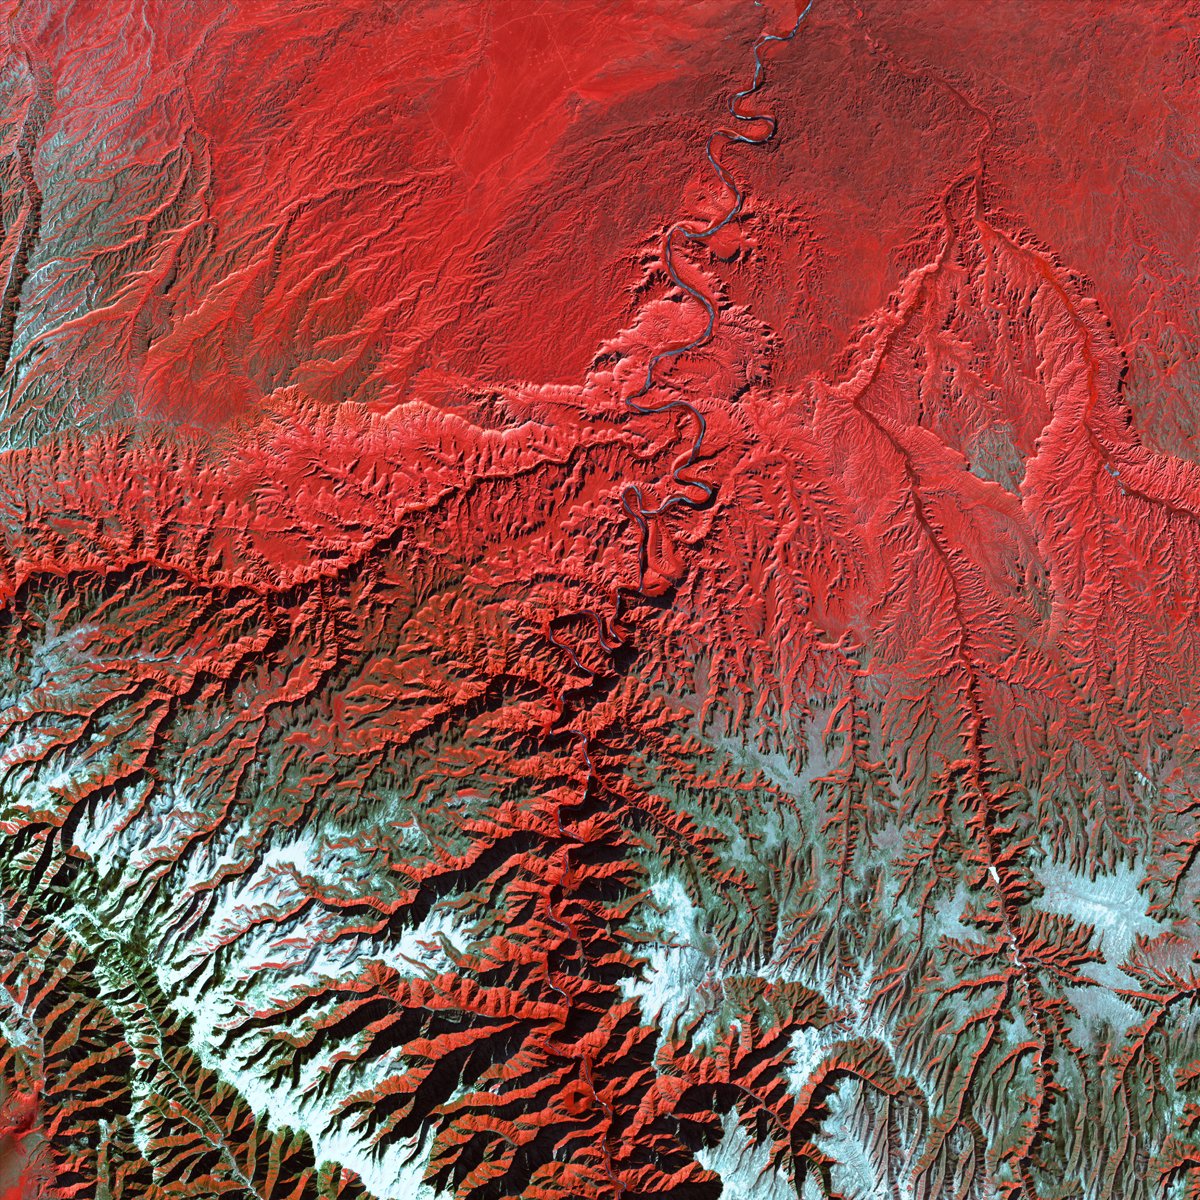 Landsat-7 - Desolation Canyon